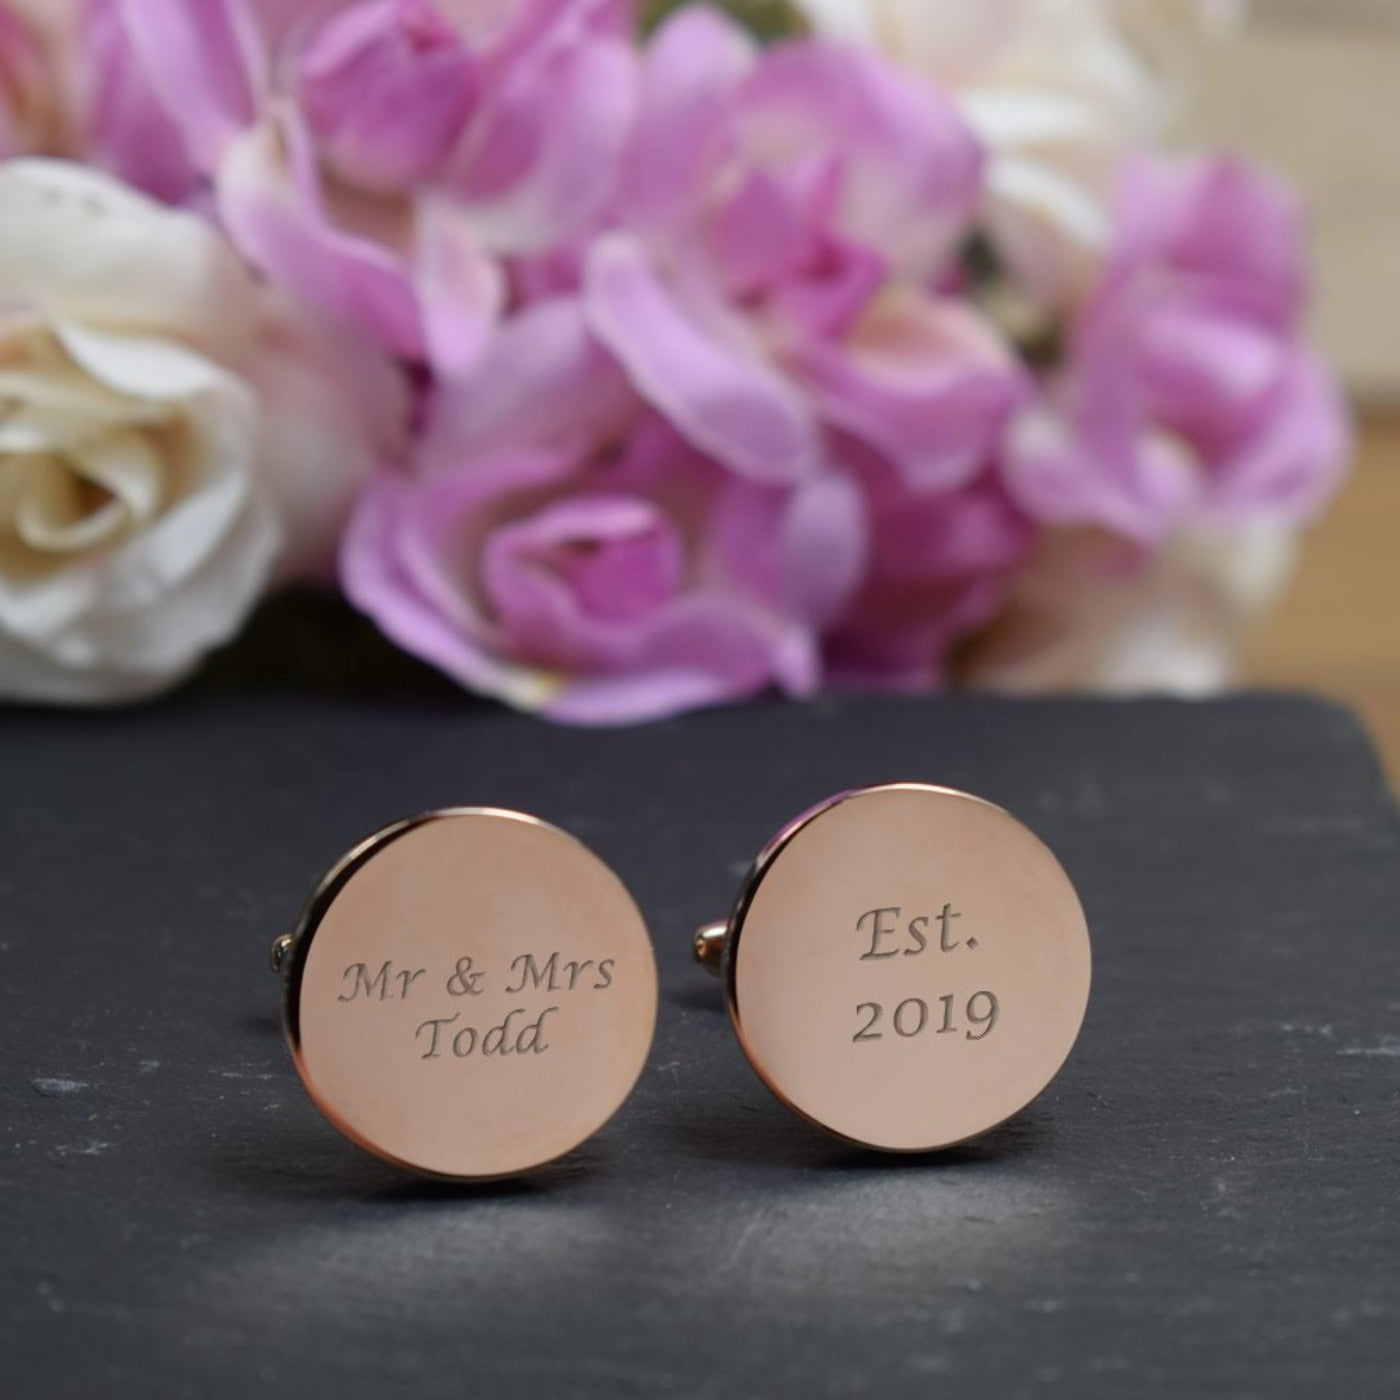 Personalised Rose Gold Round Cufflinks - Wedding, Mr & Mrs, Mr & Mr